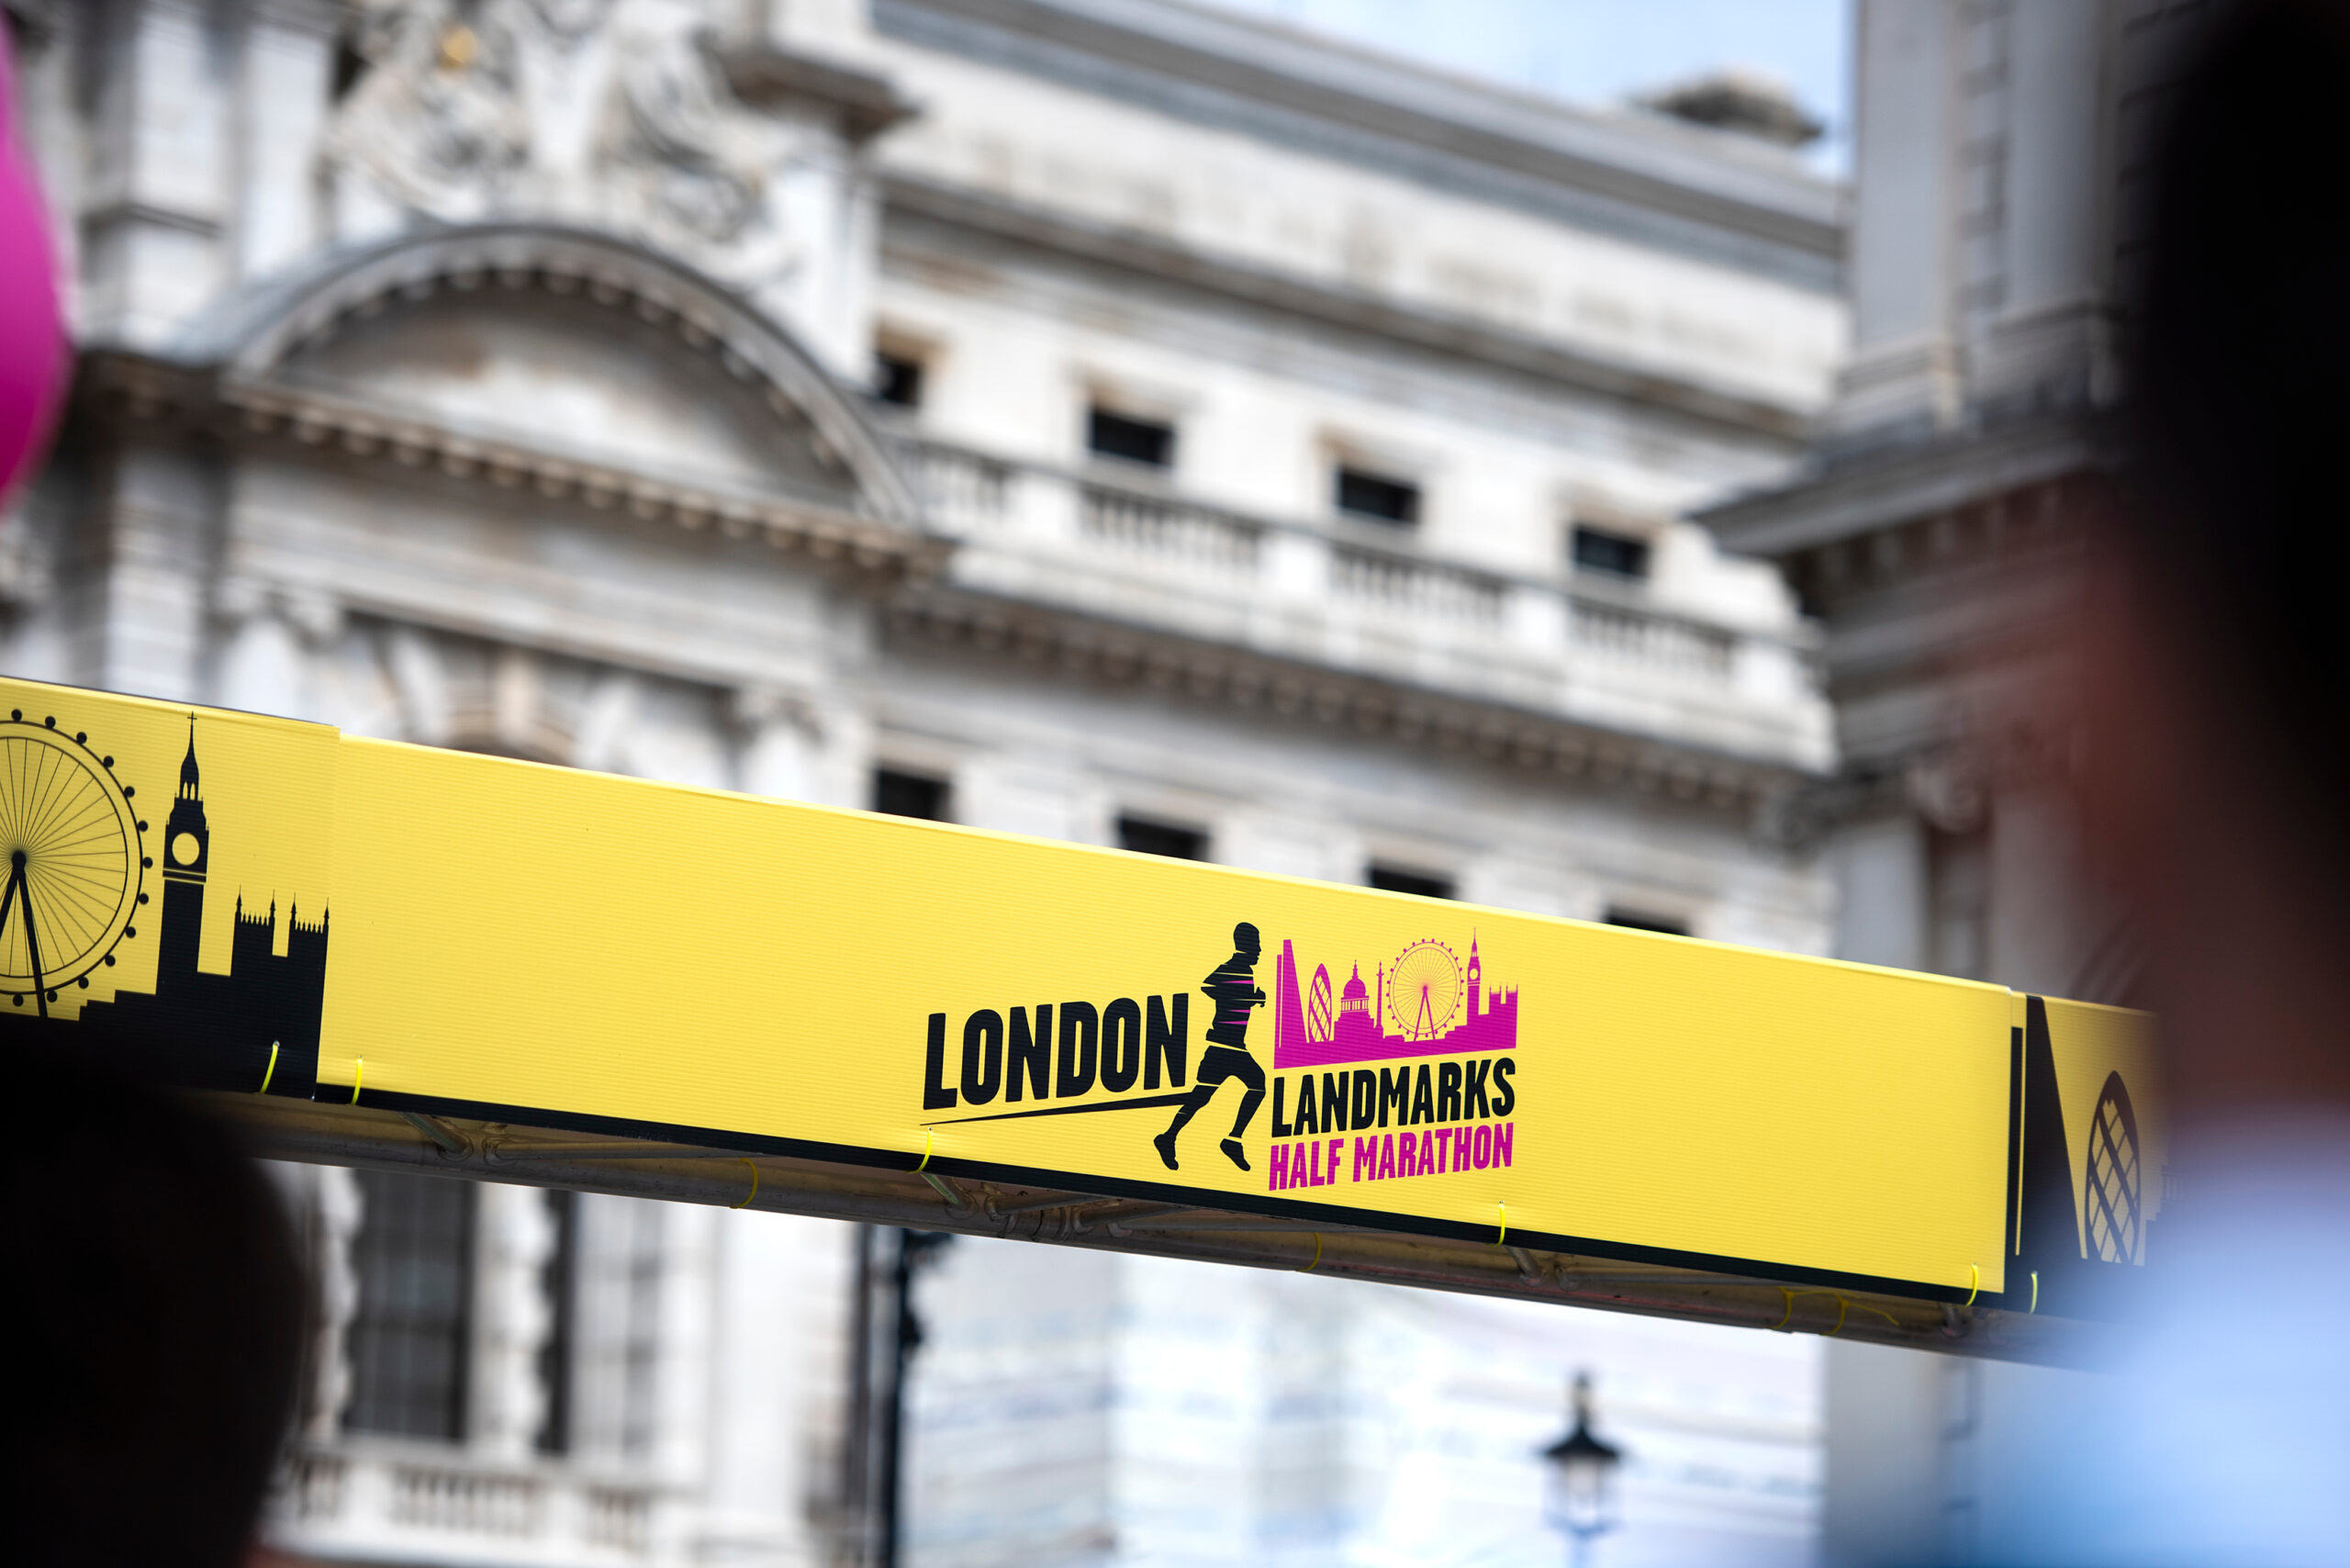 London Landmarks Half Marathon banner